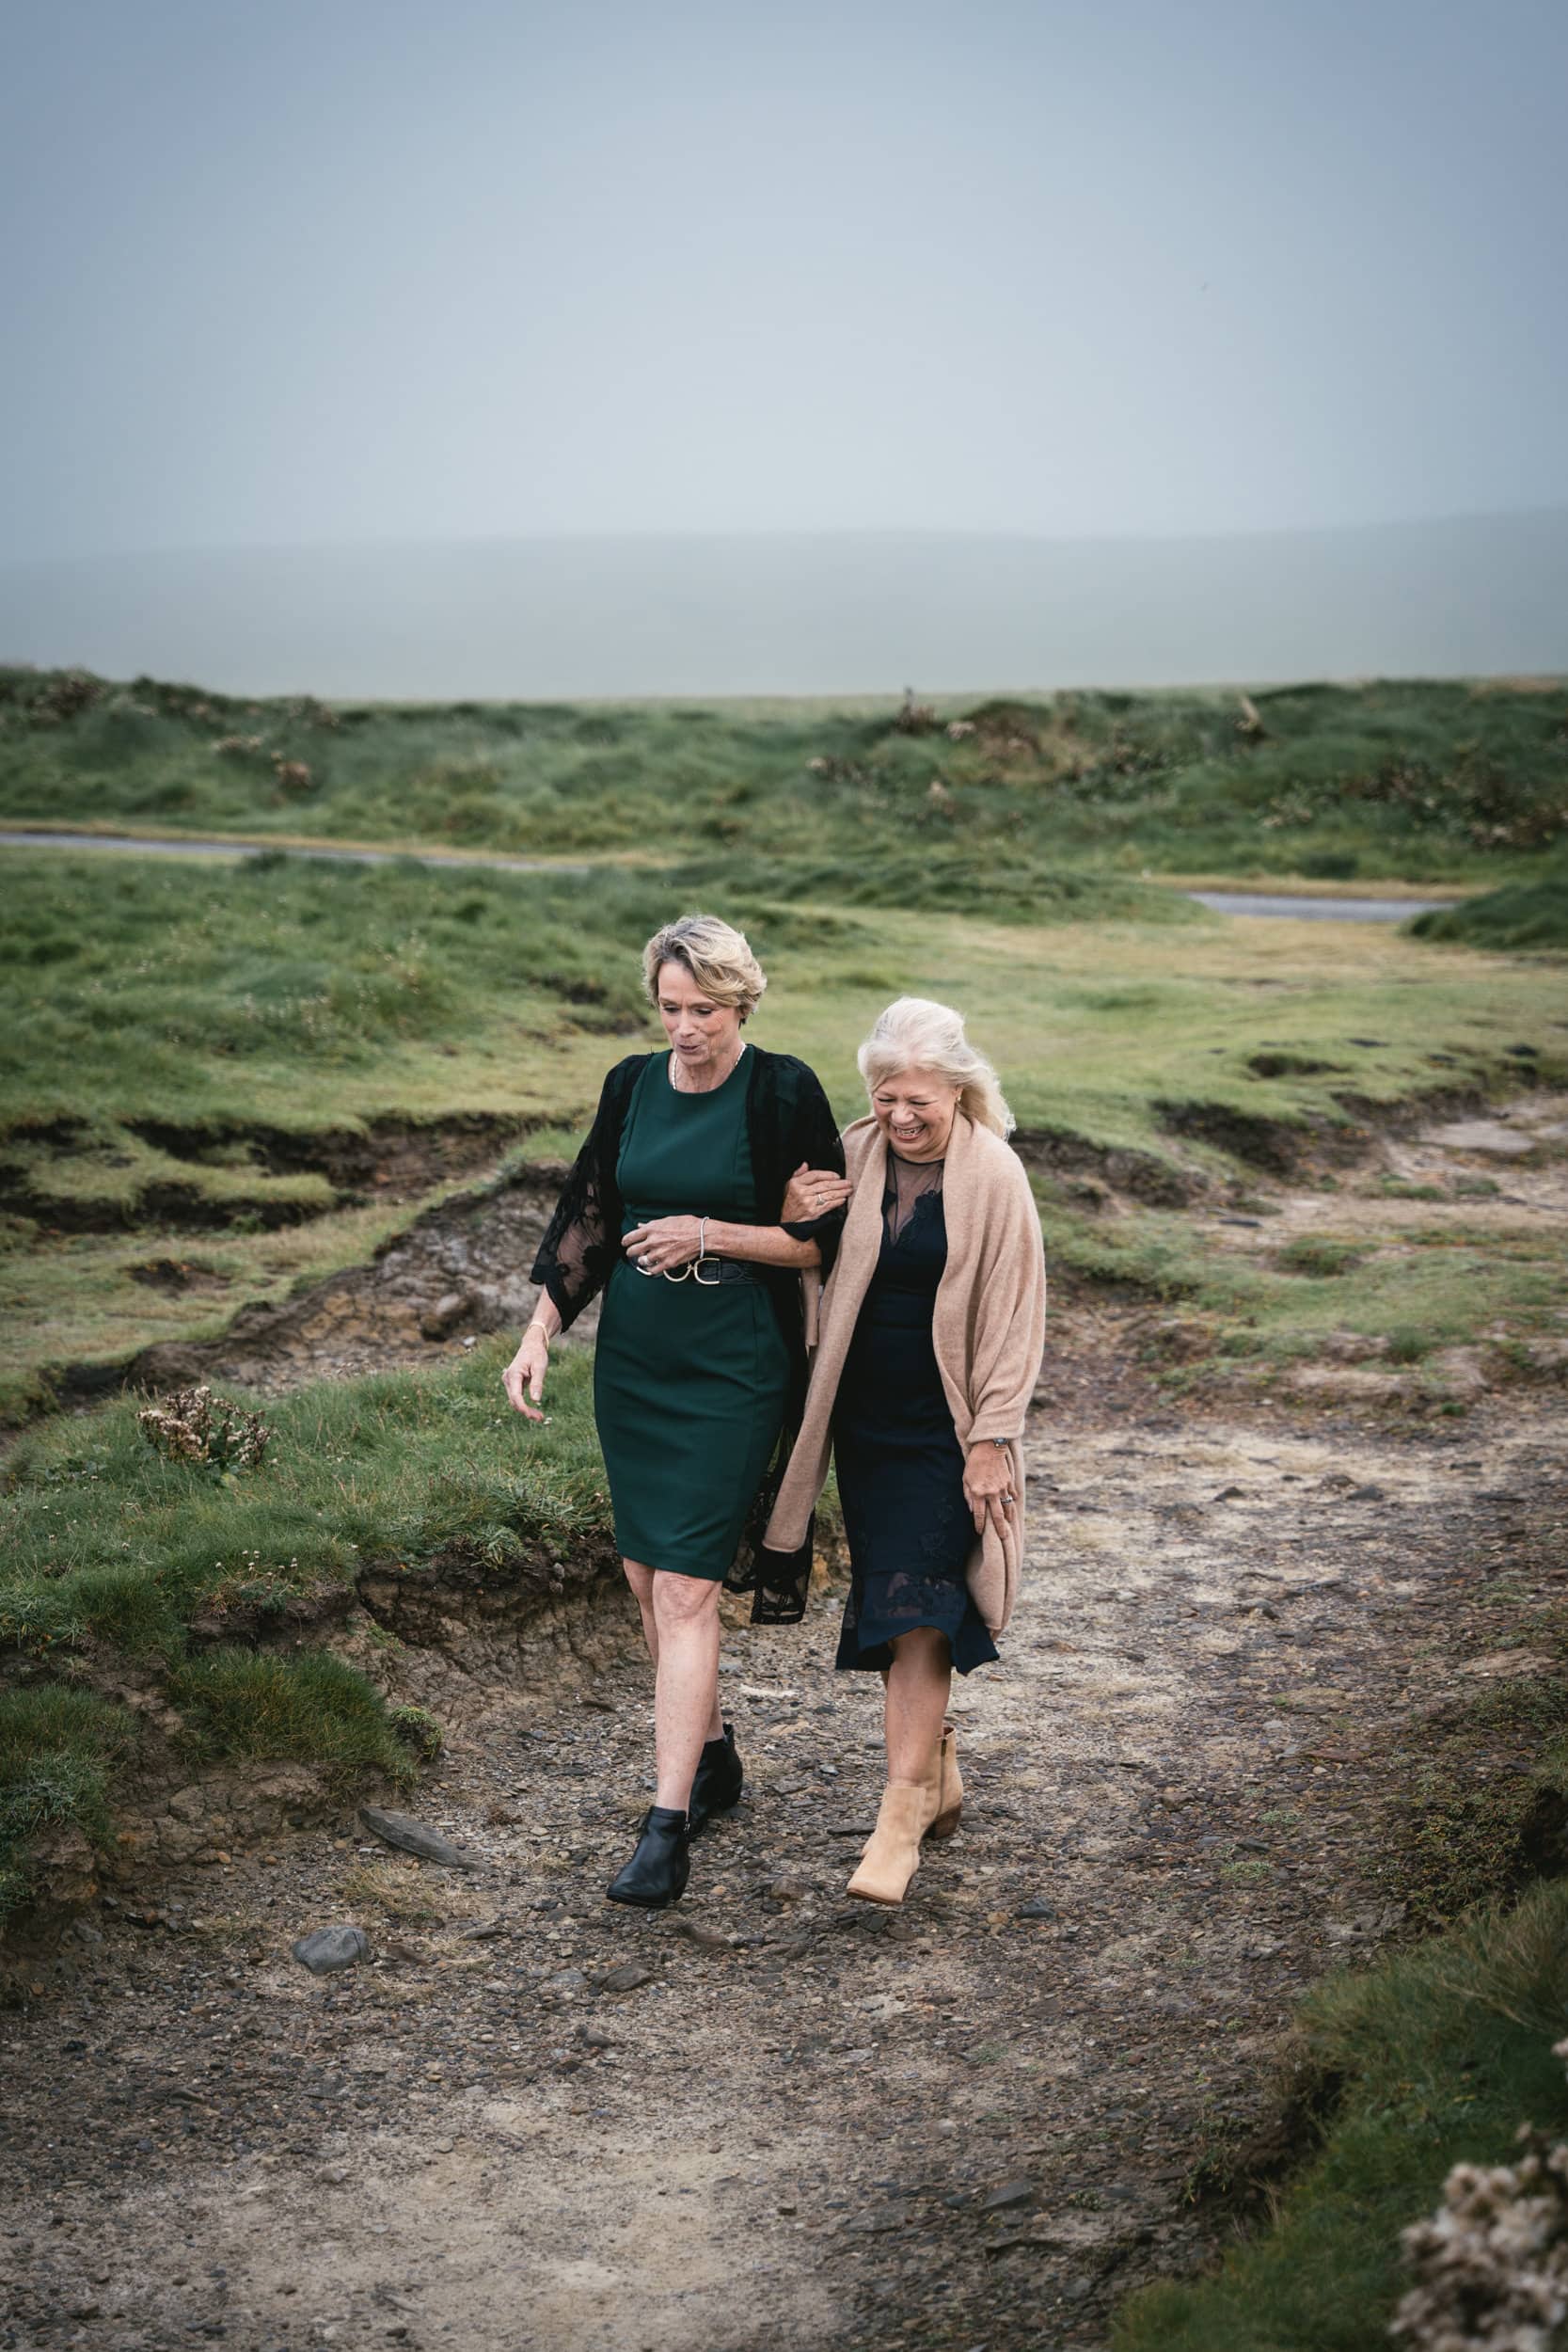 Strolling along the Irish shore: Their love journey.